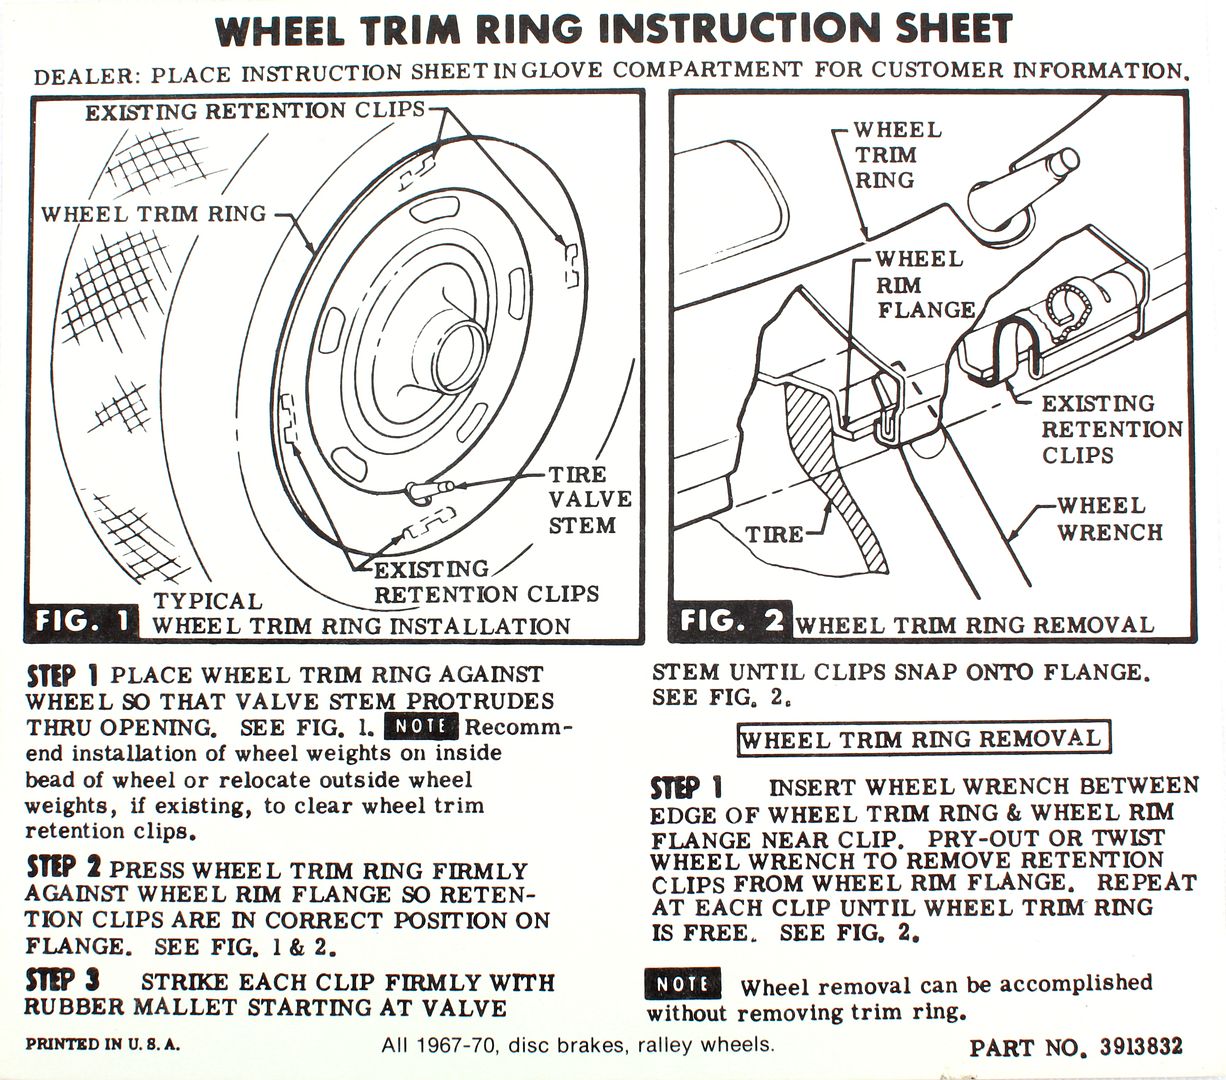 Chevrolet GM Rally Wheel Trim Ring Instruction Sheet For The Glovebox